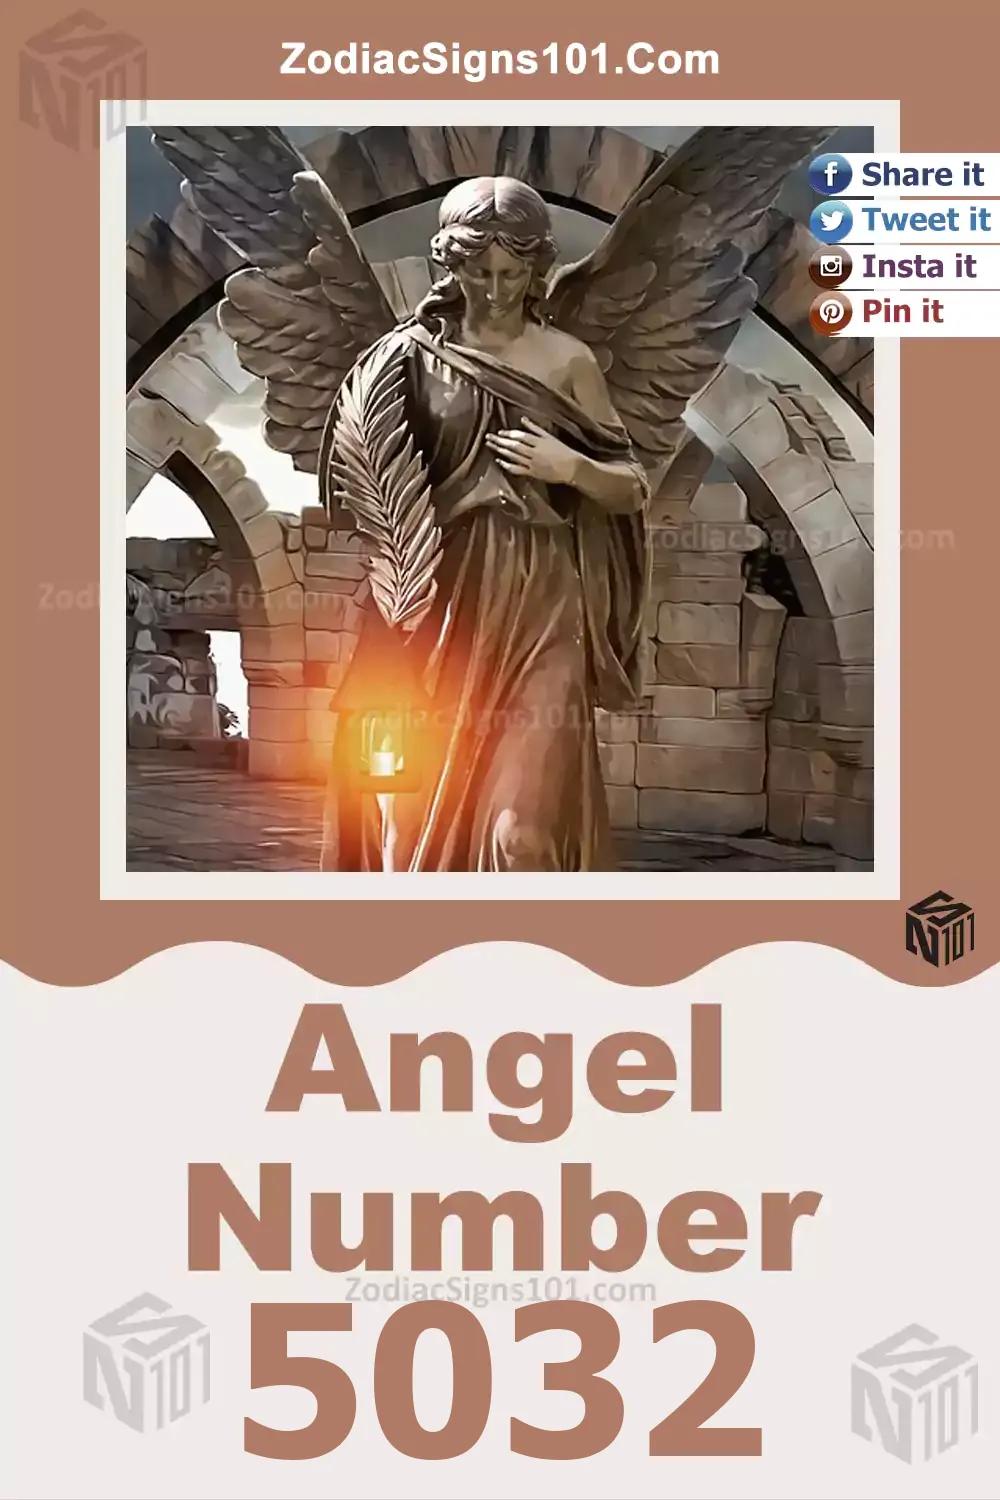 5032-Angel-Number-Meaning.jpg